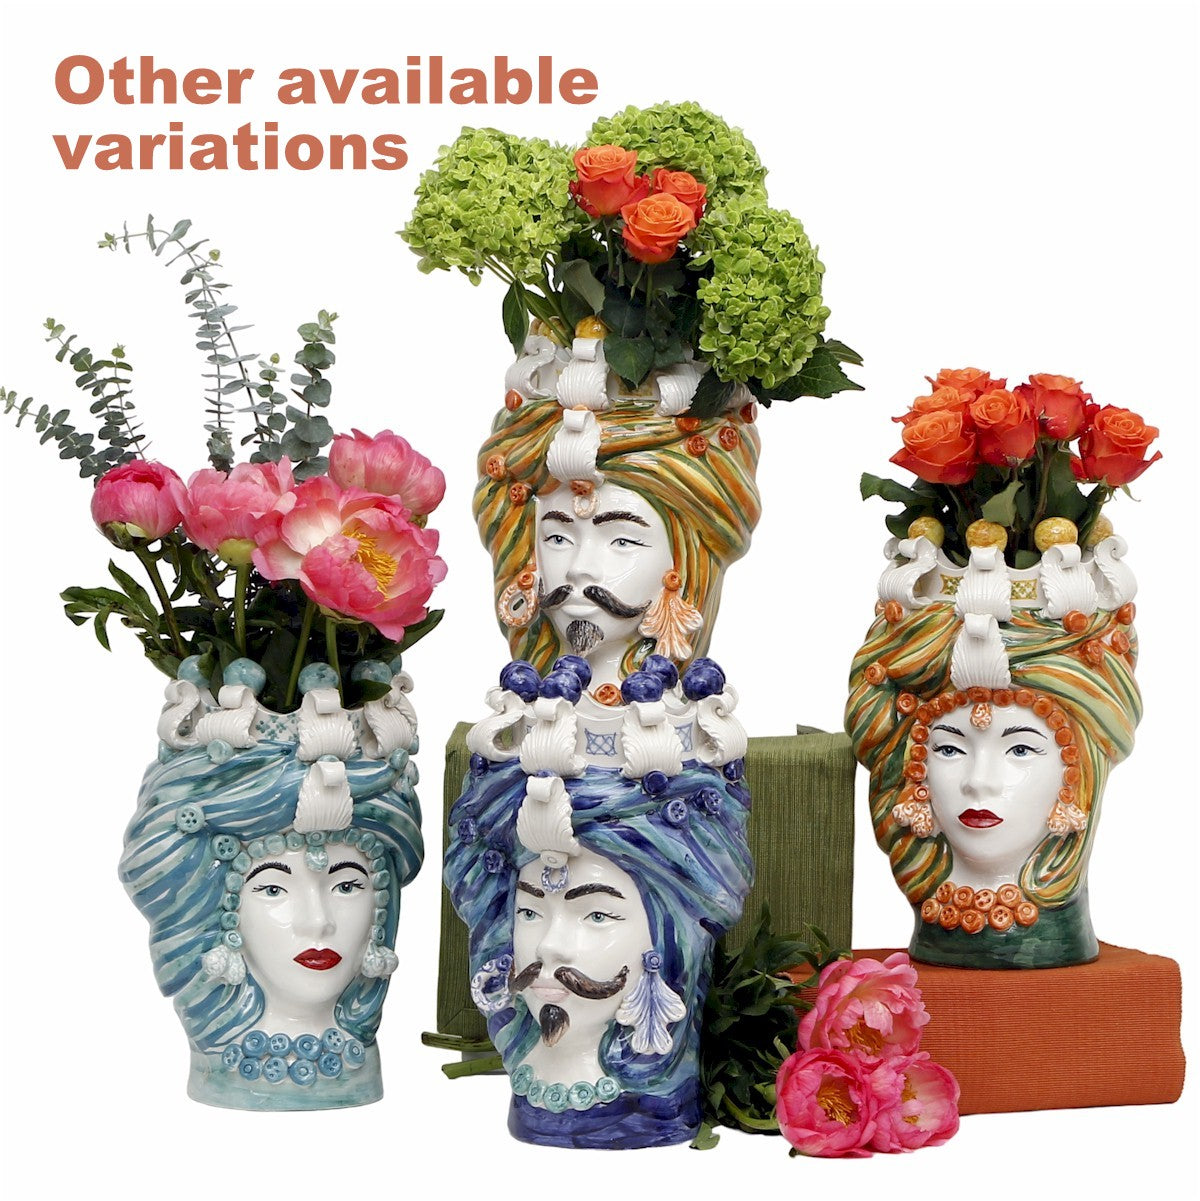 MICALE DI ARCIREALE: Deluxe Moorish Sicilian Head Vase - Man Orange/Yellow/Green Tone Accents